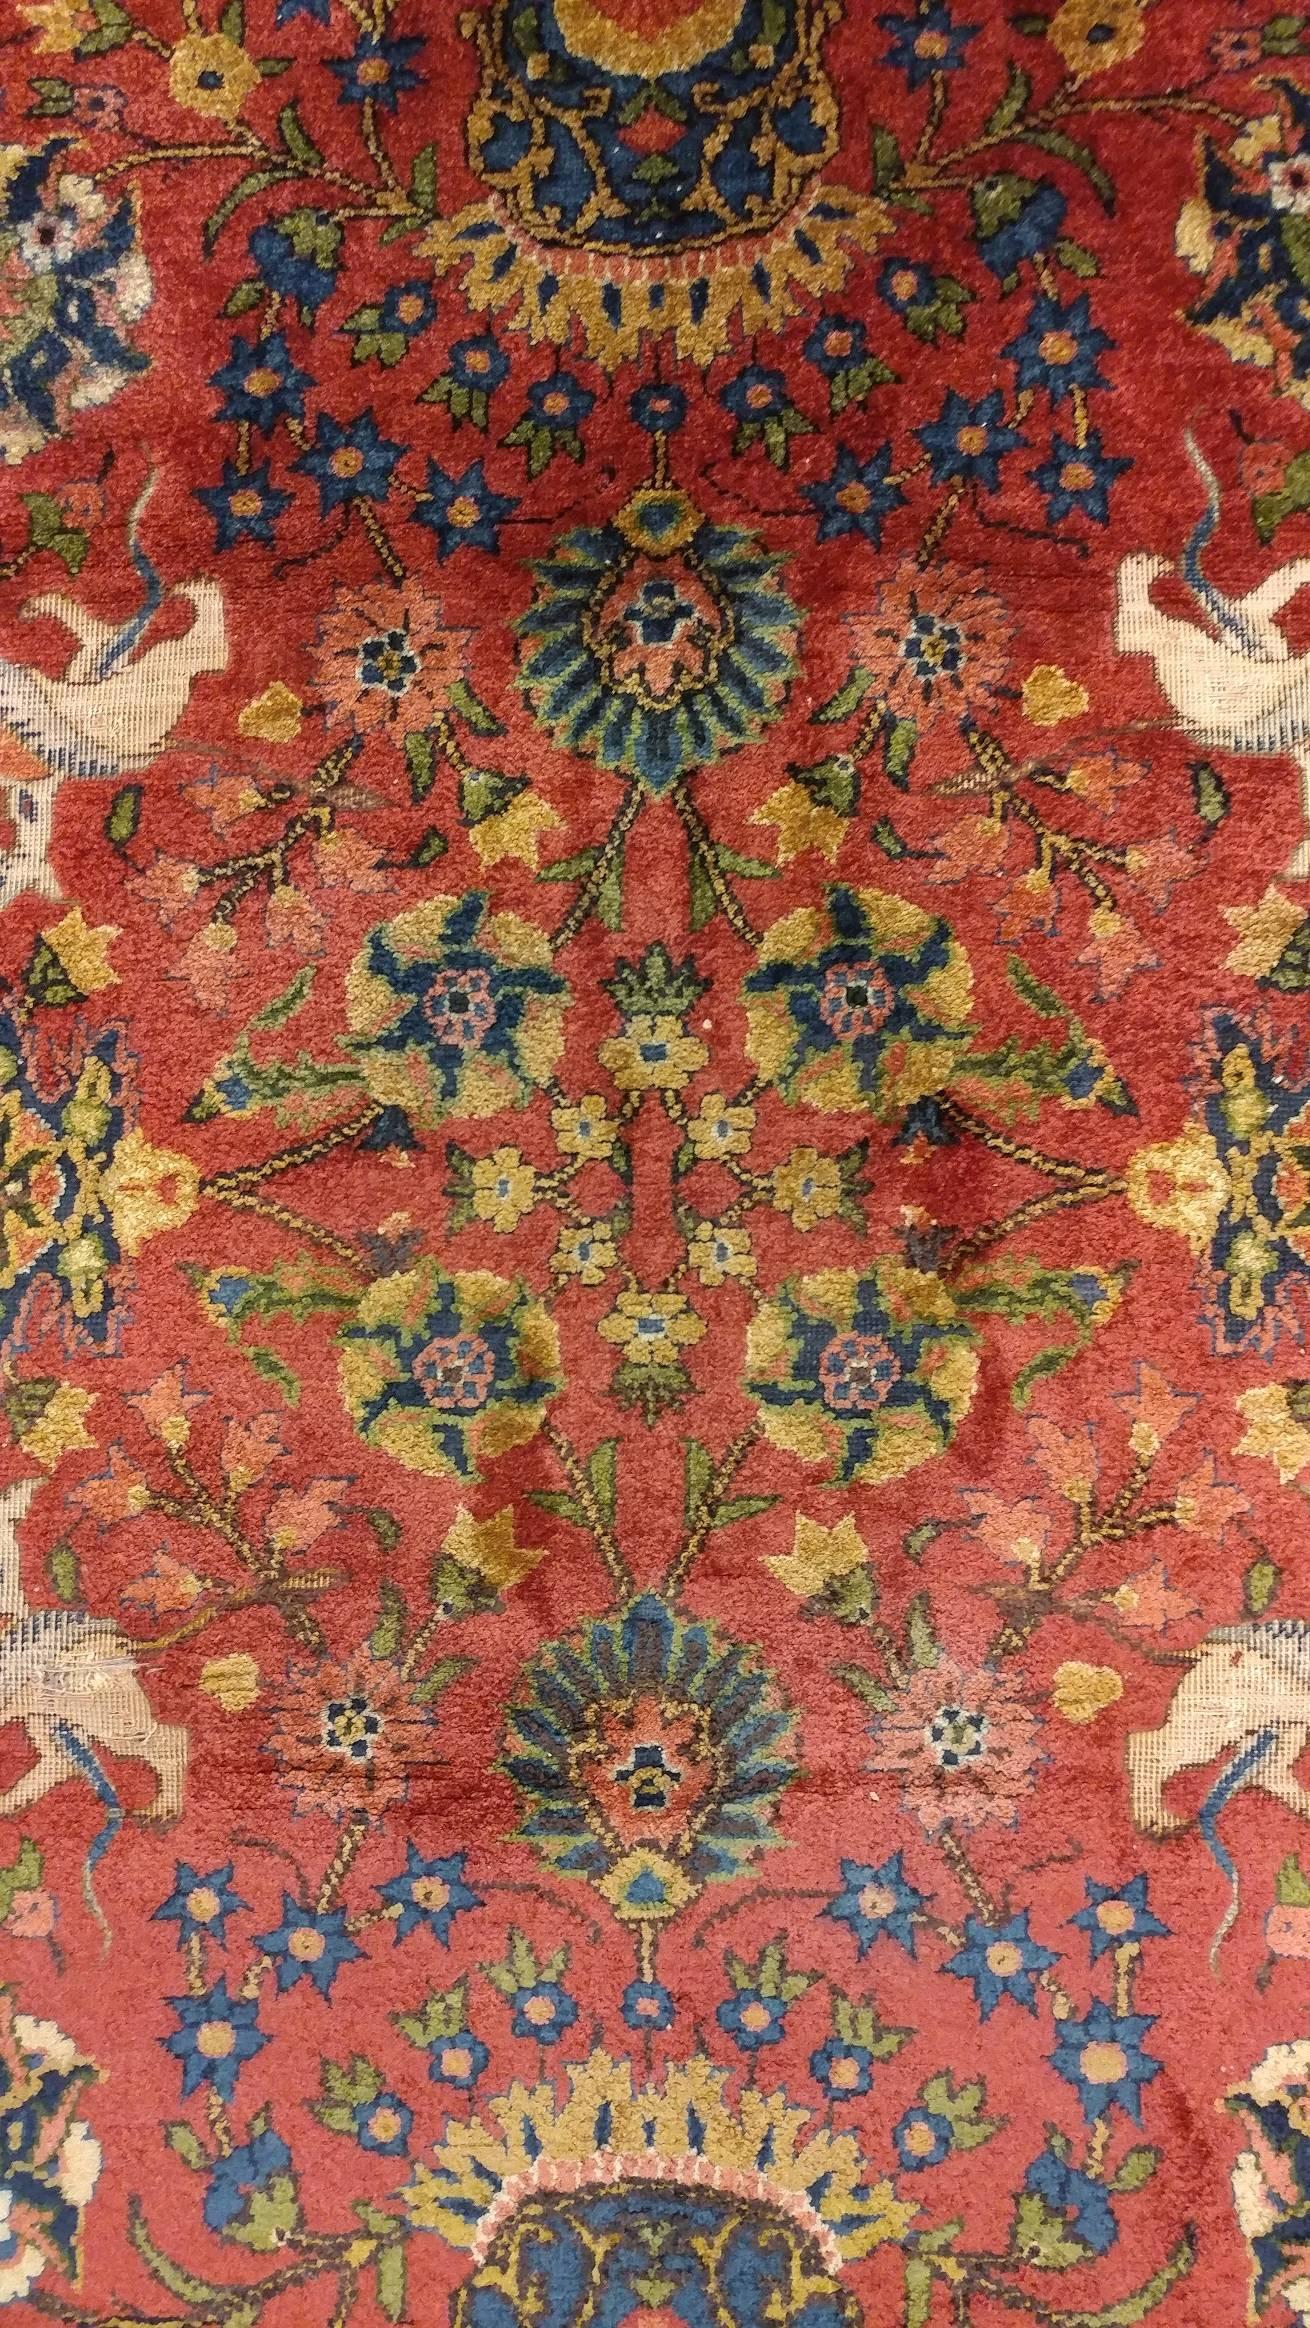 Antique Silk Turkish Rug, Handmade Oriental Rug, Red and Blue, Fine Silk Rugs 1